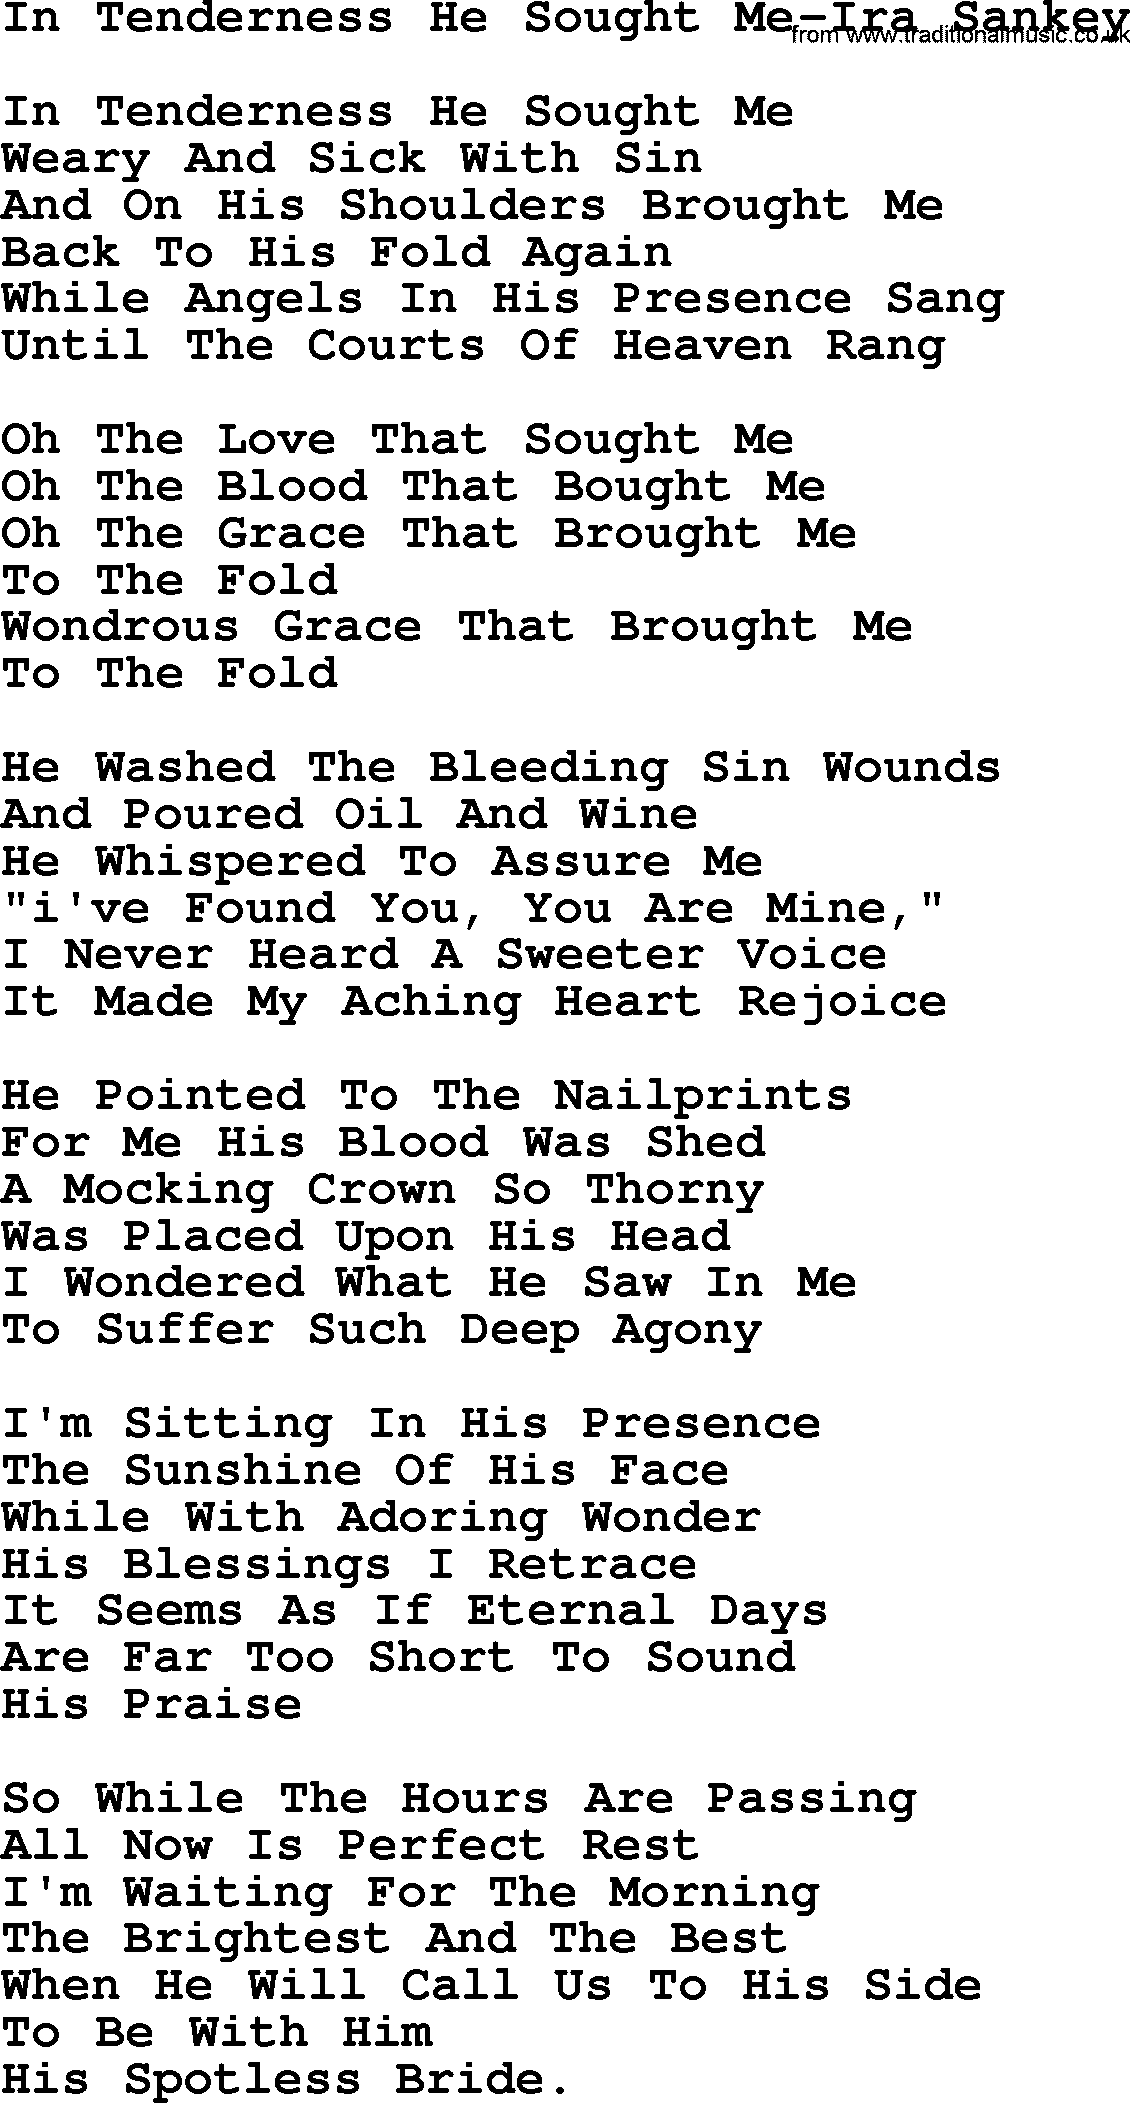 Ira Sankey hymn: In Tenderness He Sought Me-Ira Sankey, lyrics